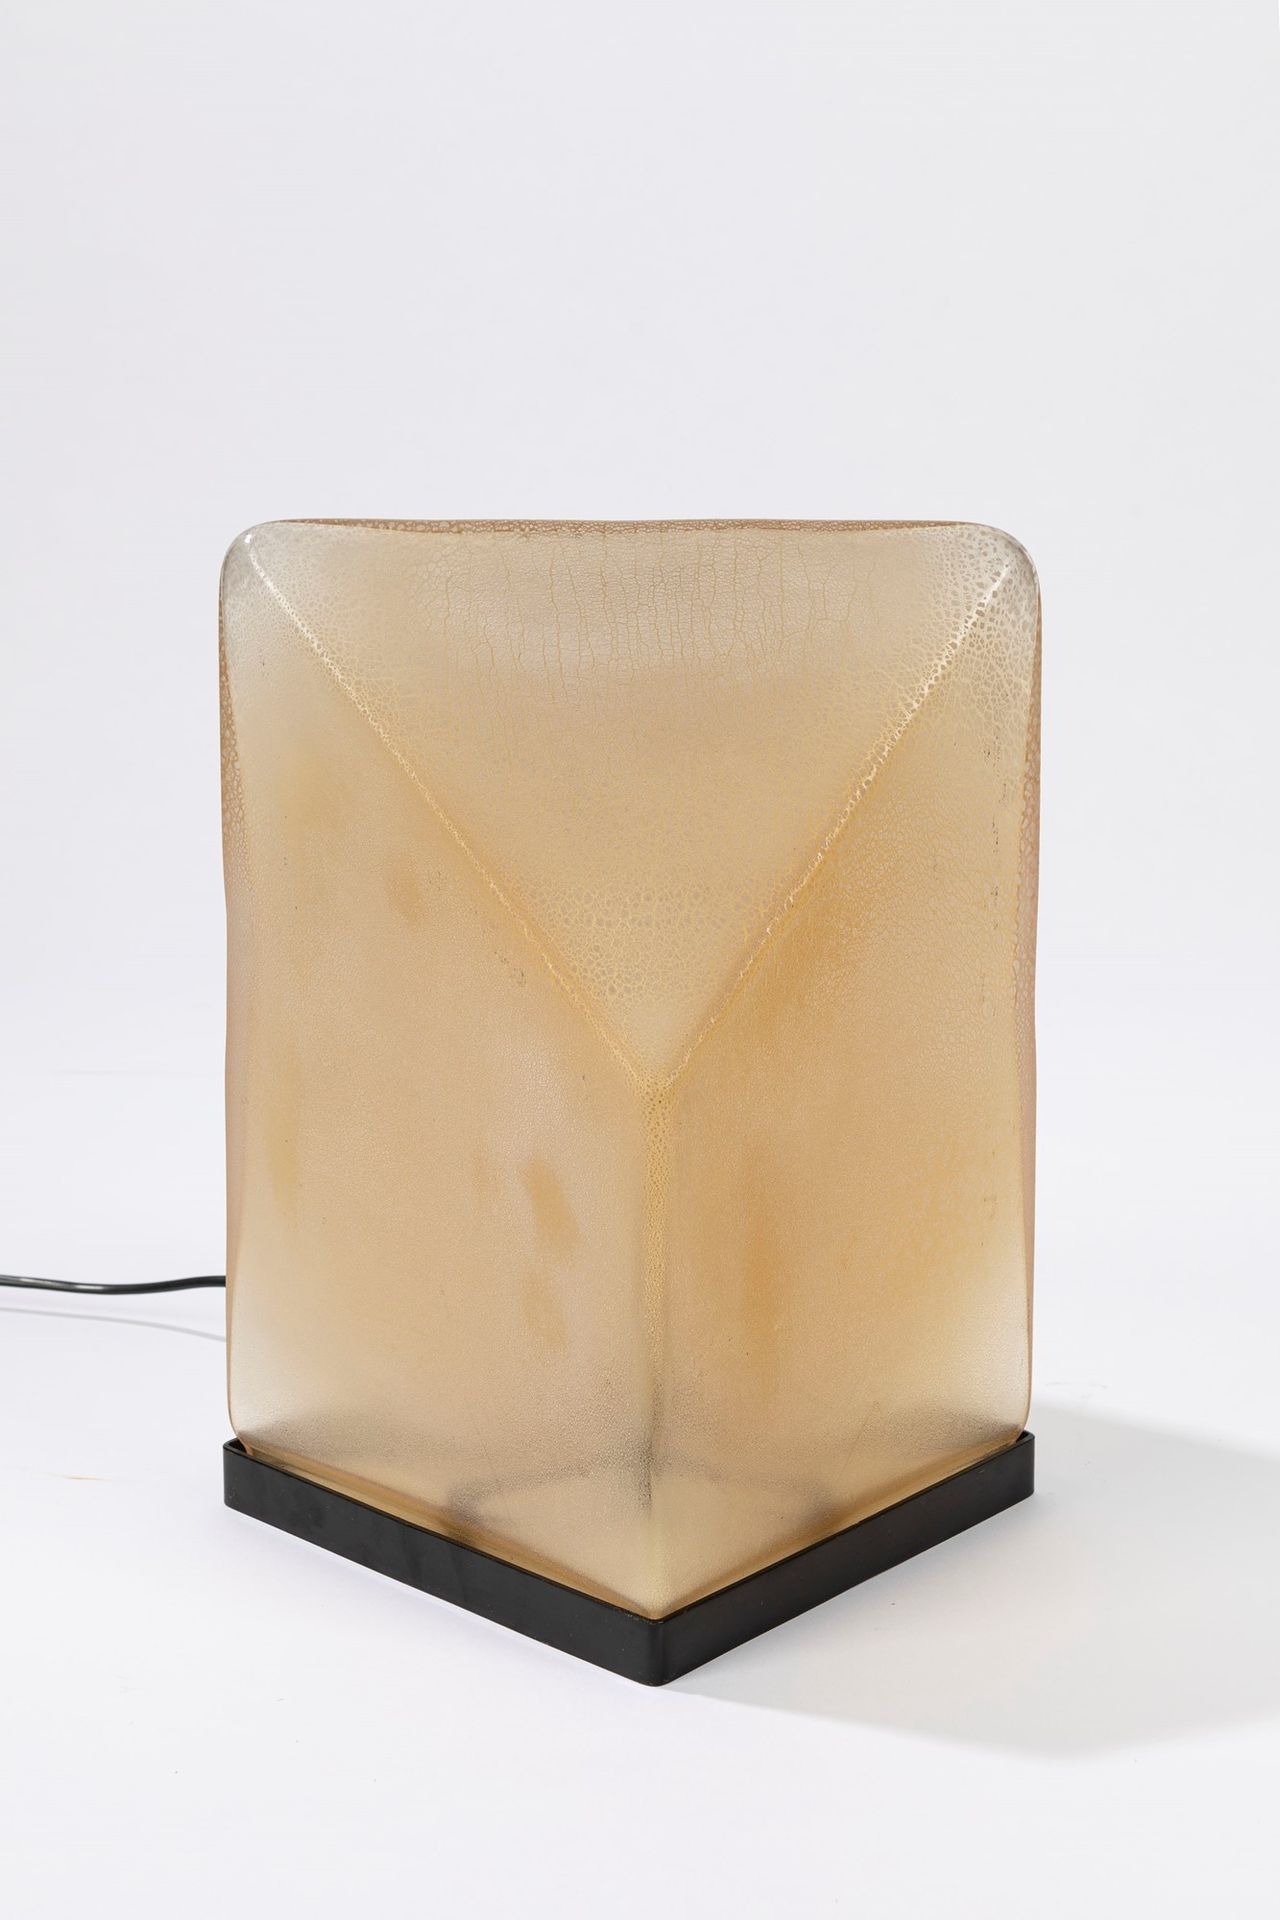 Alfredo Barbini Trapezio Skulptur Lampe, 1970 ca.

H 42 x 33 x 33 cm
geblasenes &hellip;